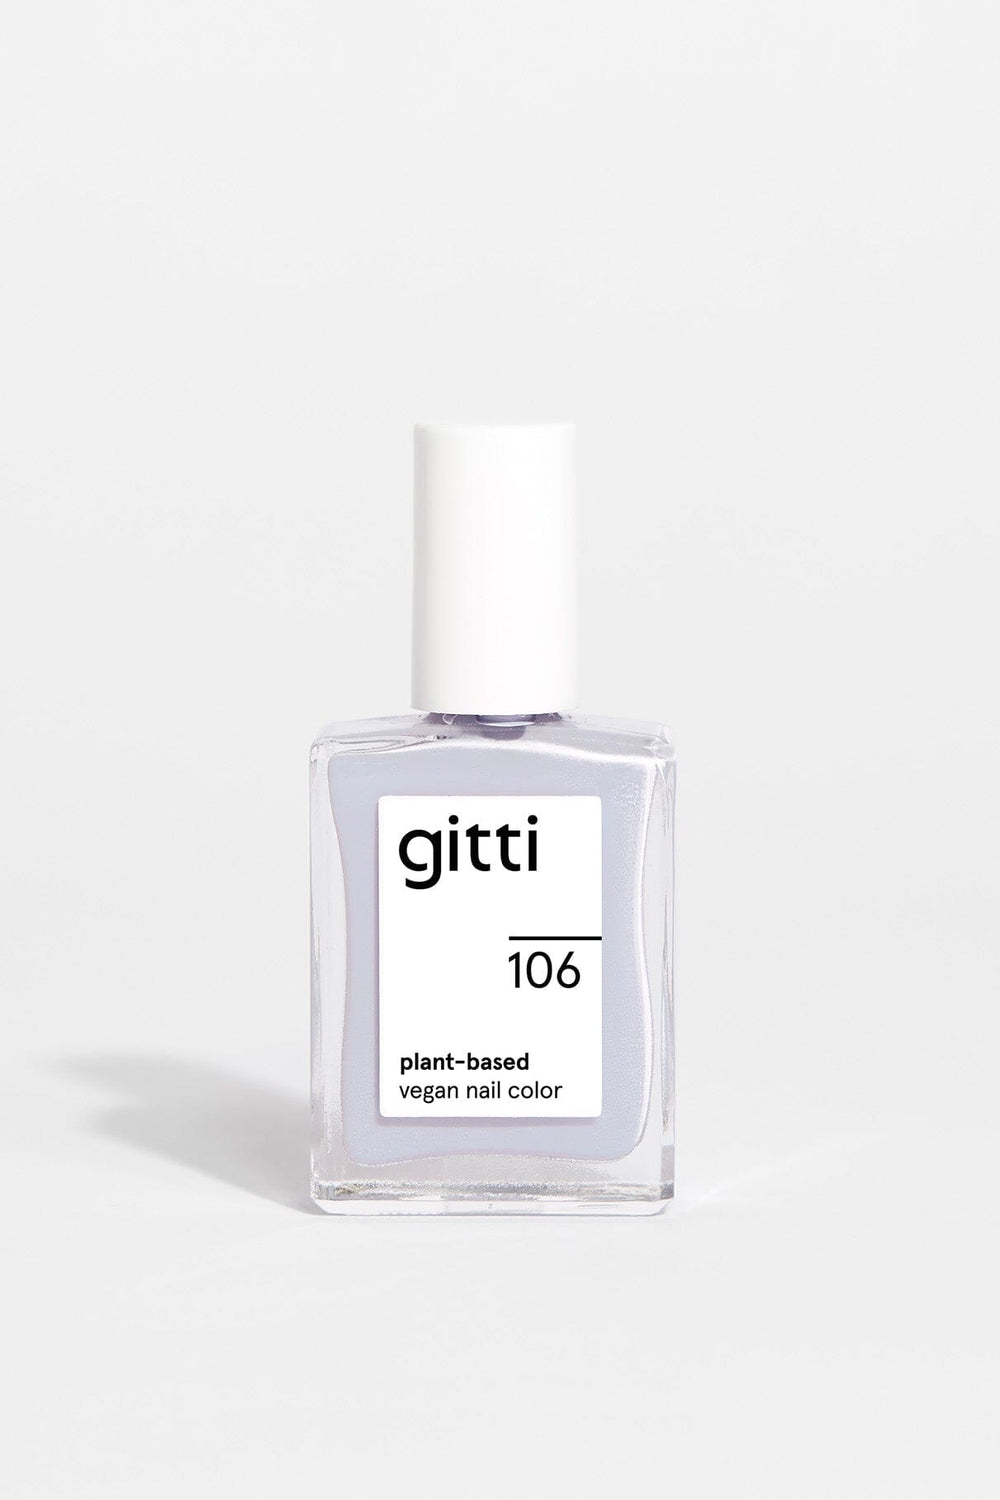 Gitti - Nail Polish 106 - Powder Blue Neglelak 